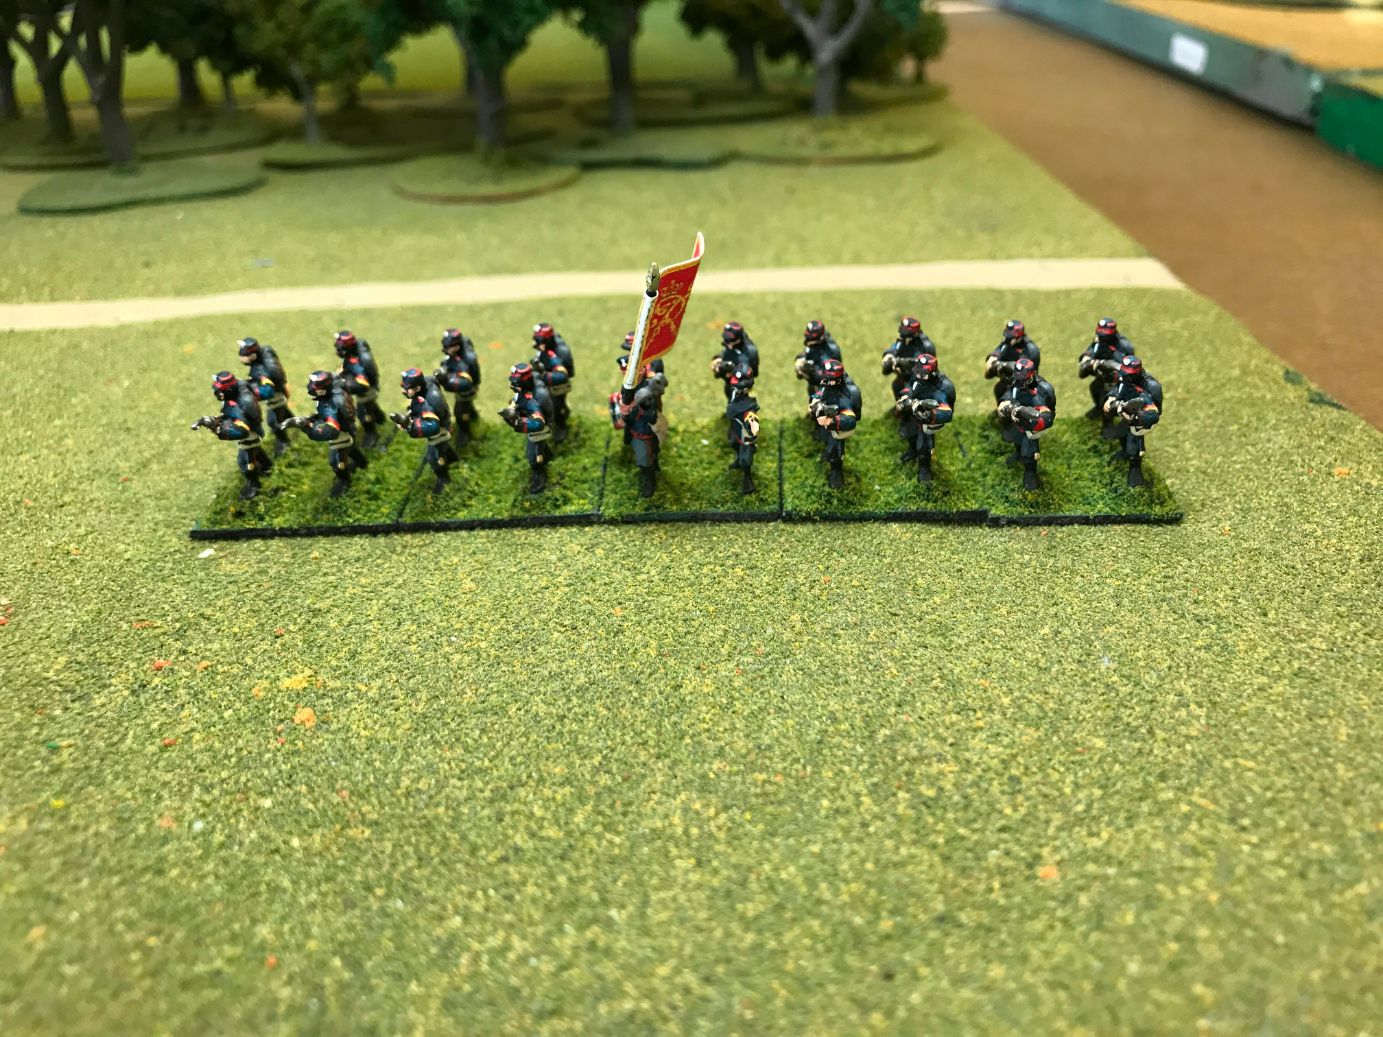 Wurttemburg Infantry Advancing